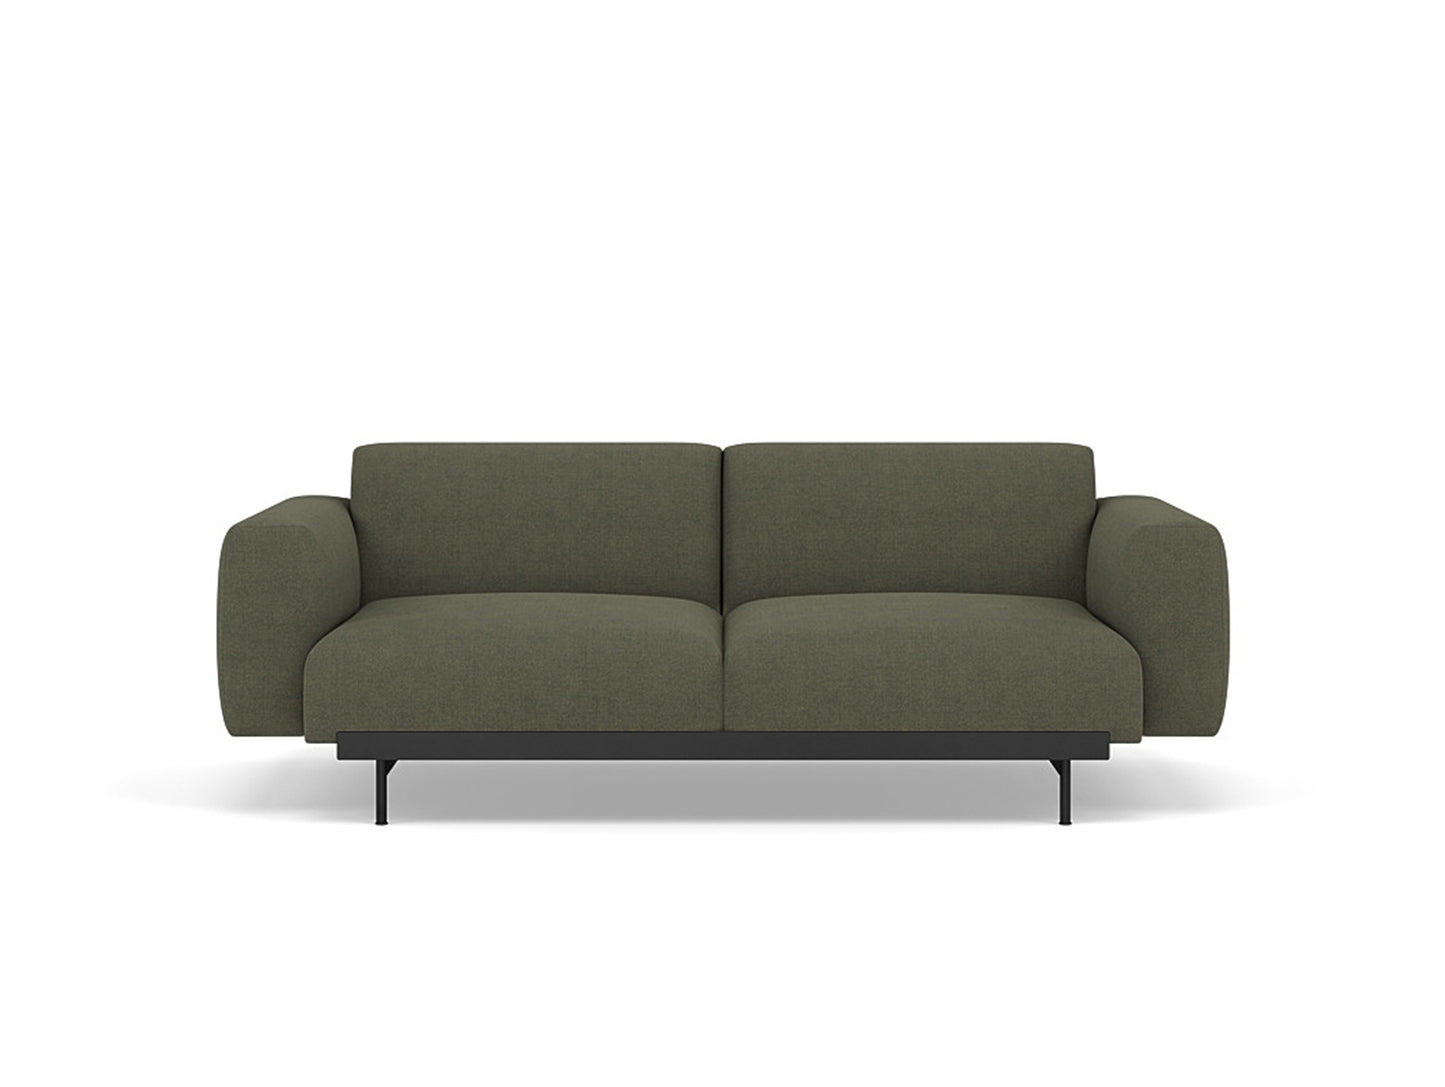 In Situ 2-Seater Modular Sofa by Muuto - Configuration 1 / Fiord 961